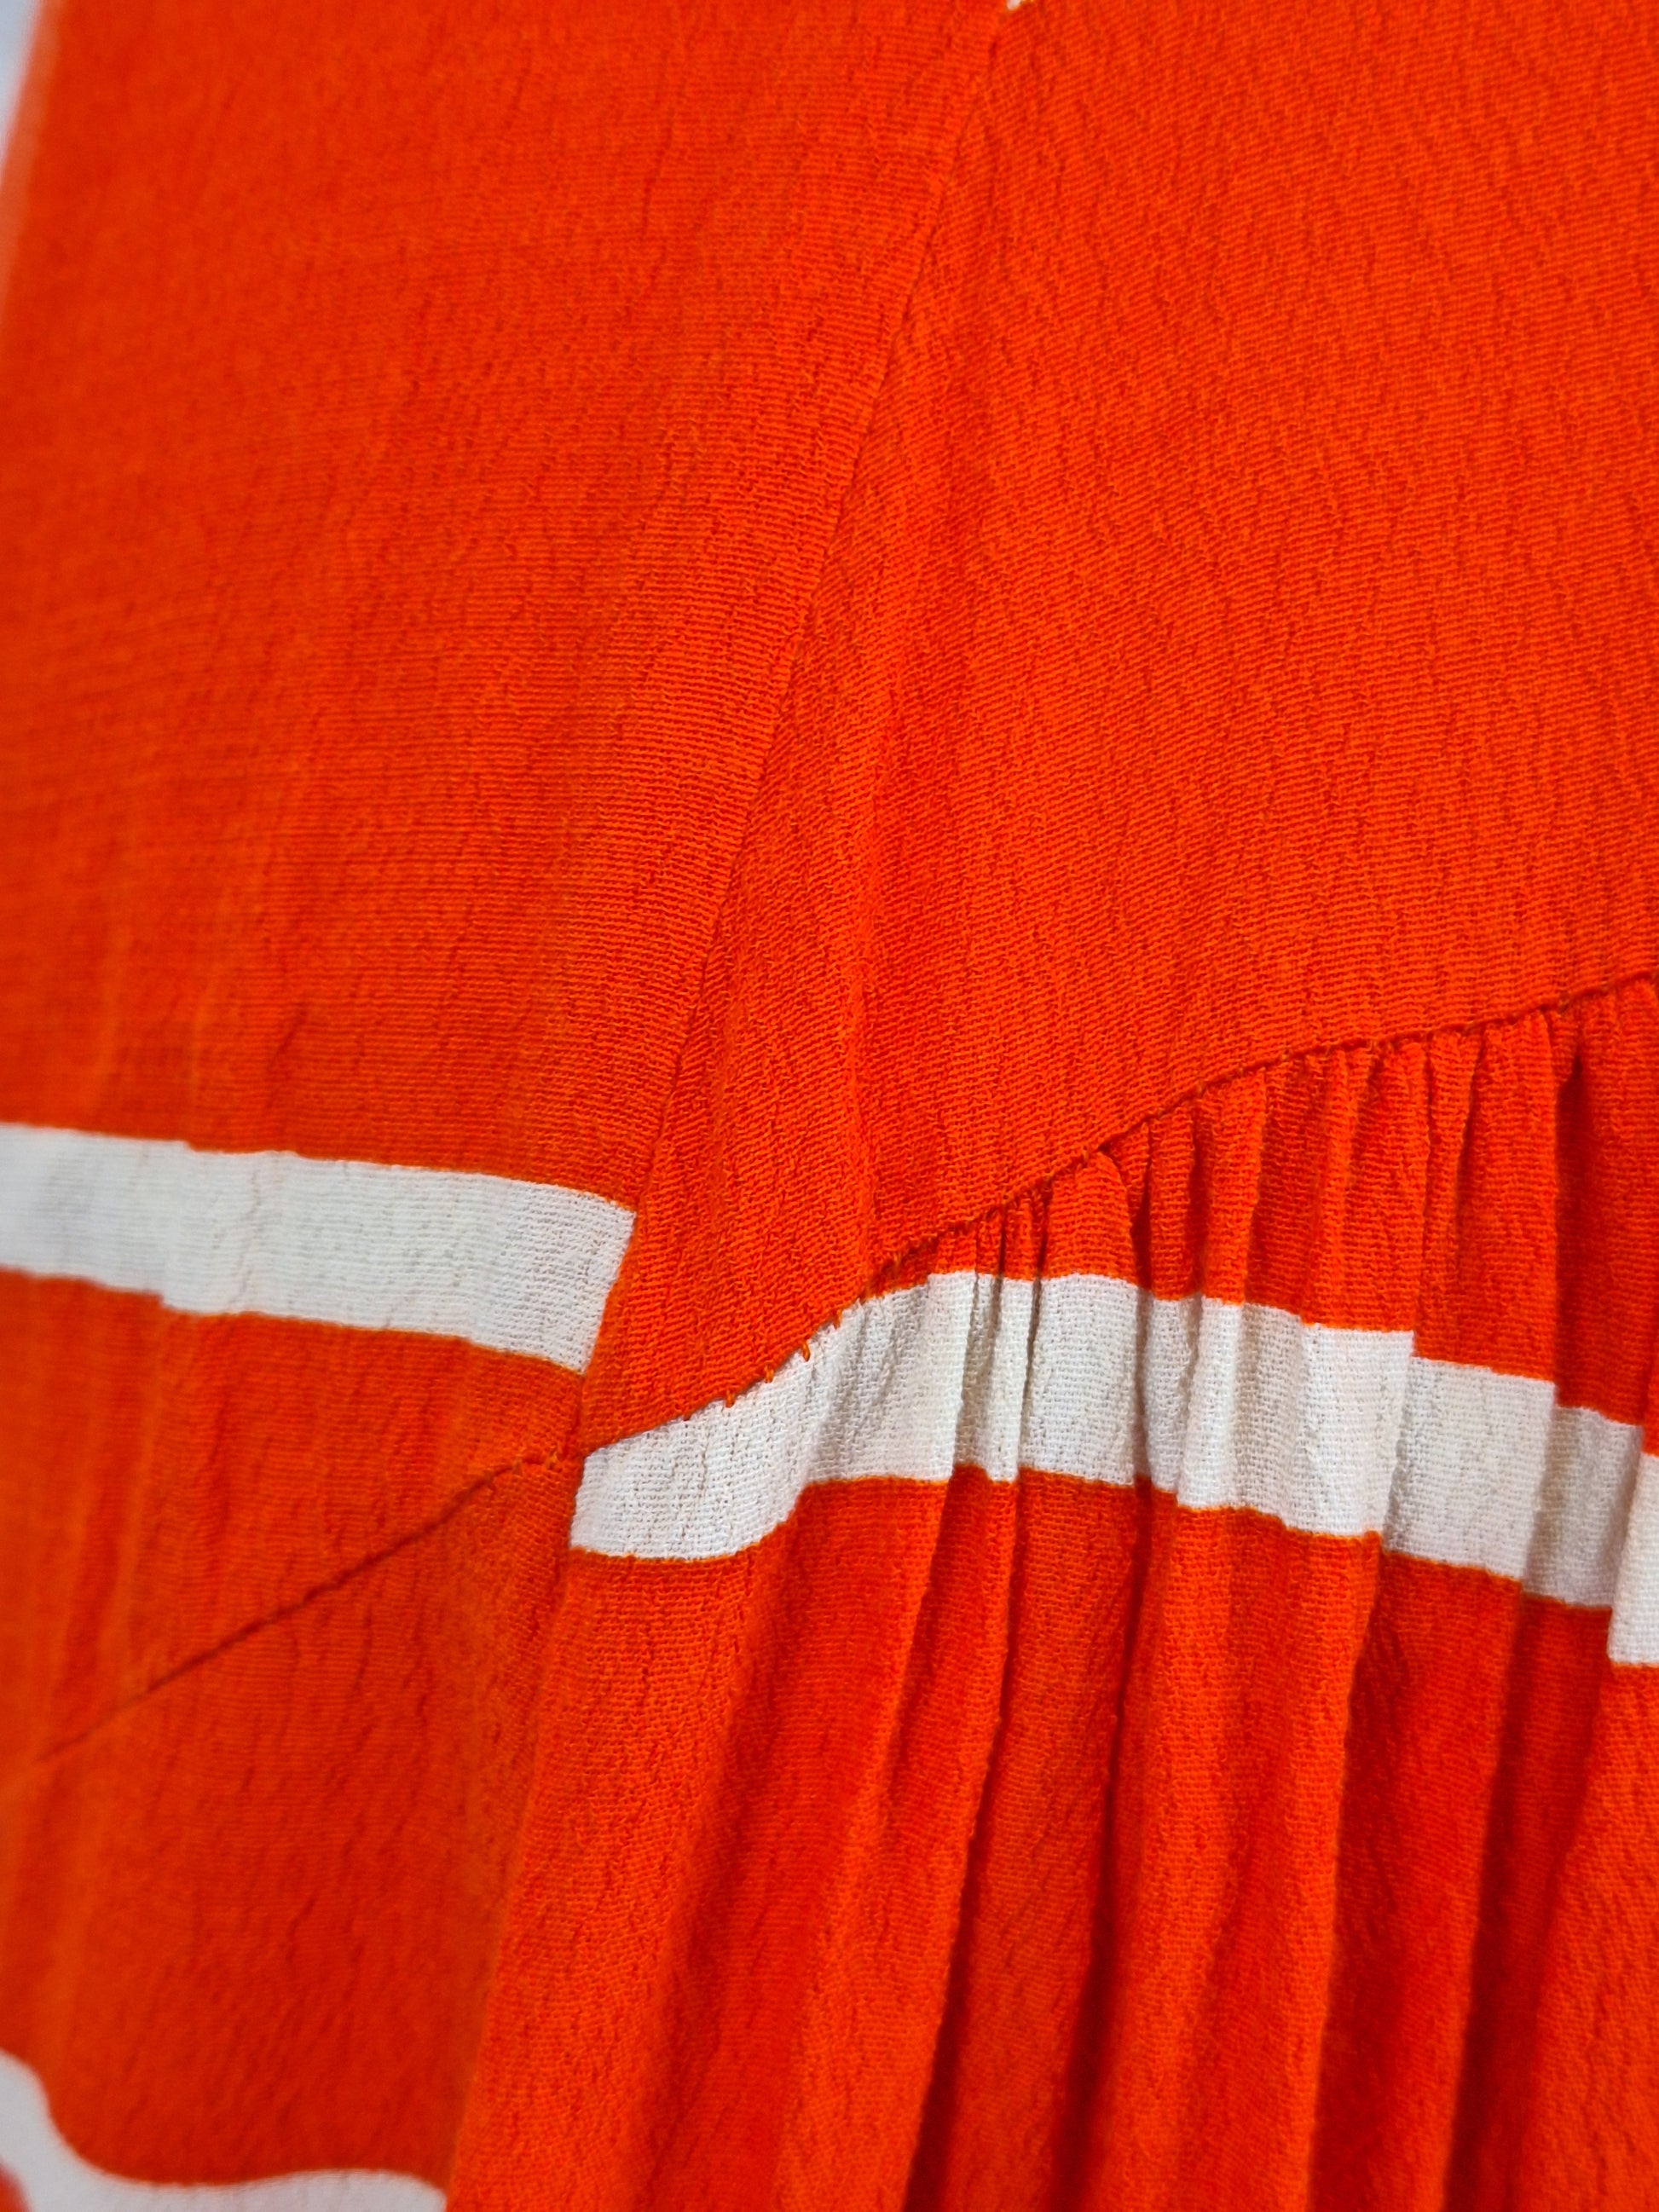 Mister Zimi Elegant Tangerine Summer Maxi Dress Size 12 by SwapUp-Online Second Hand Store-Online Thrift Store